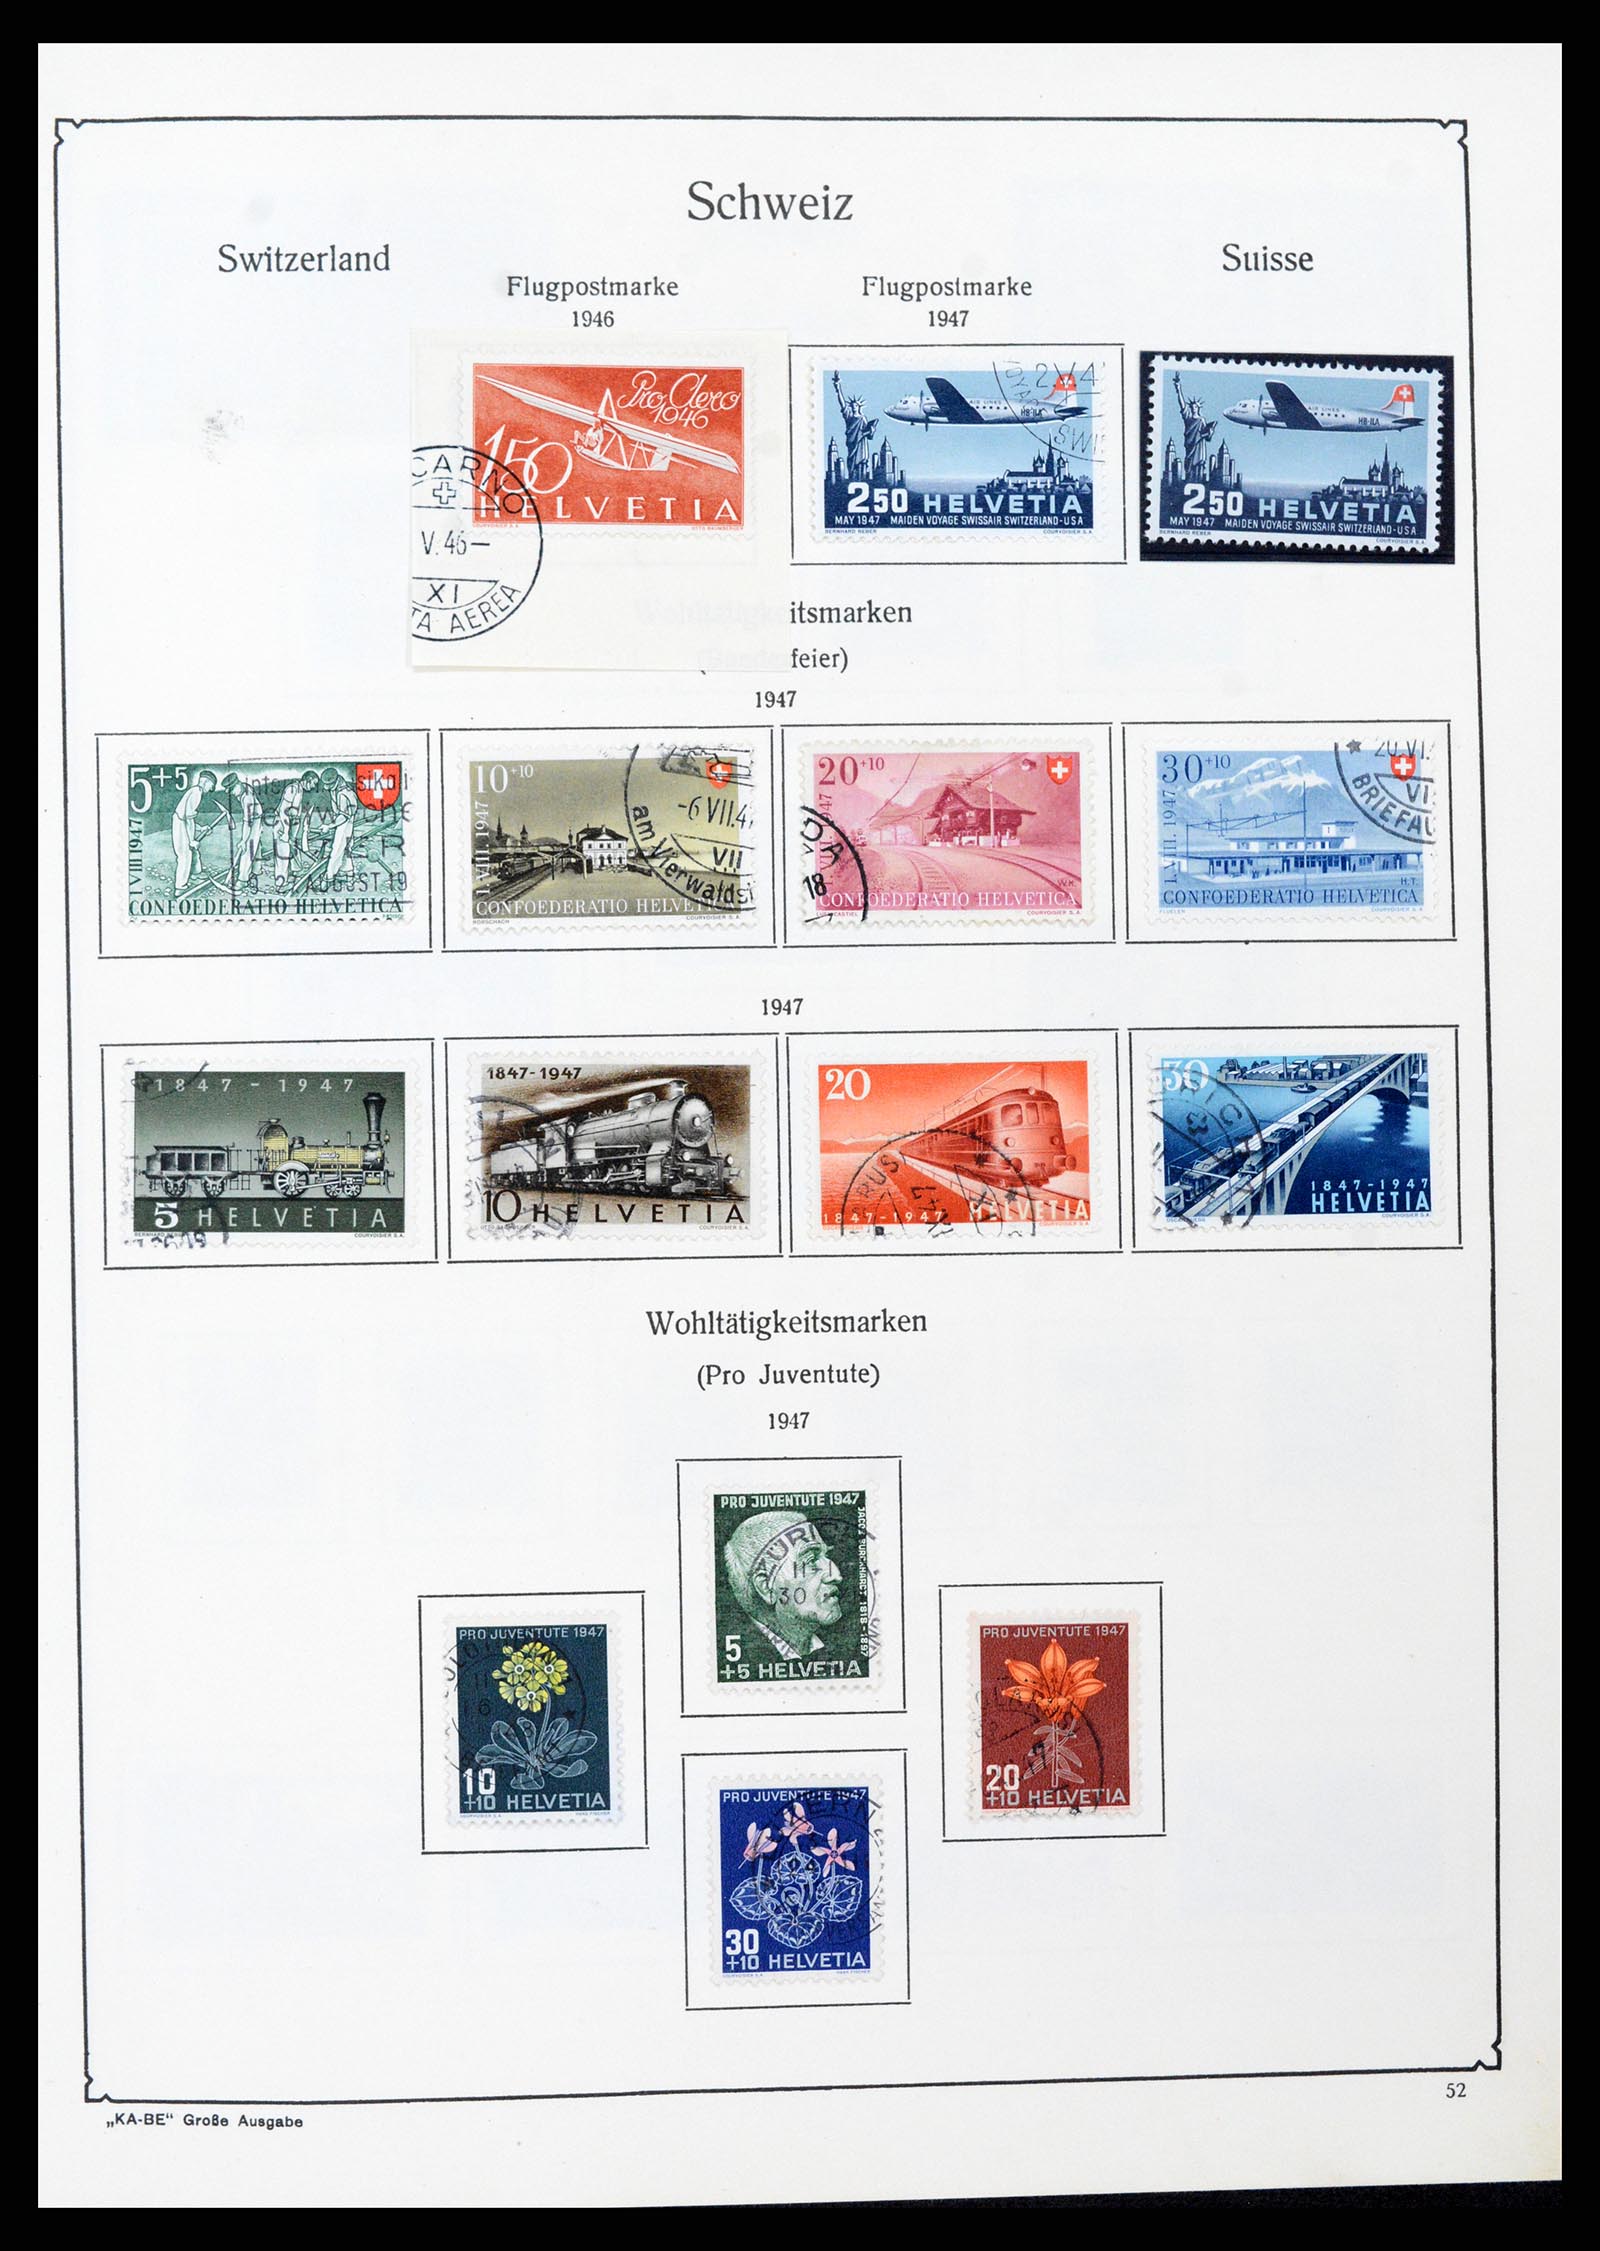 37588 050 - Stamp collection 37588 Switzerland 1854-1974.